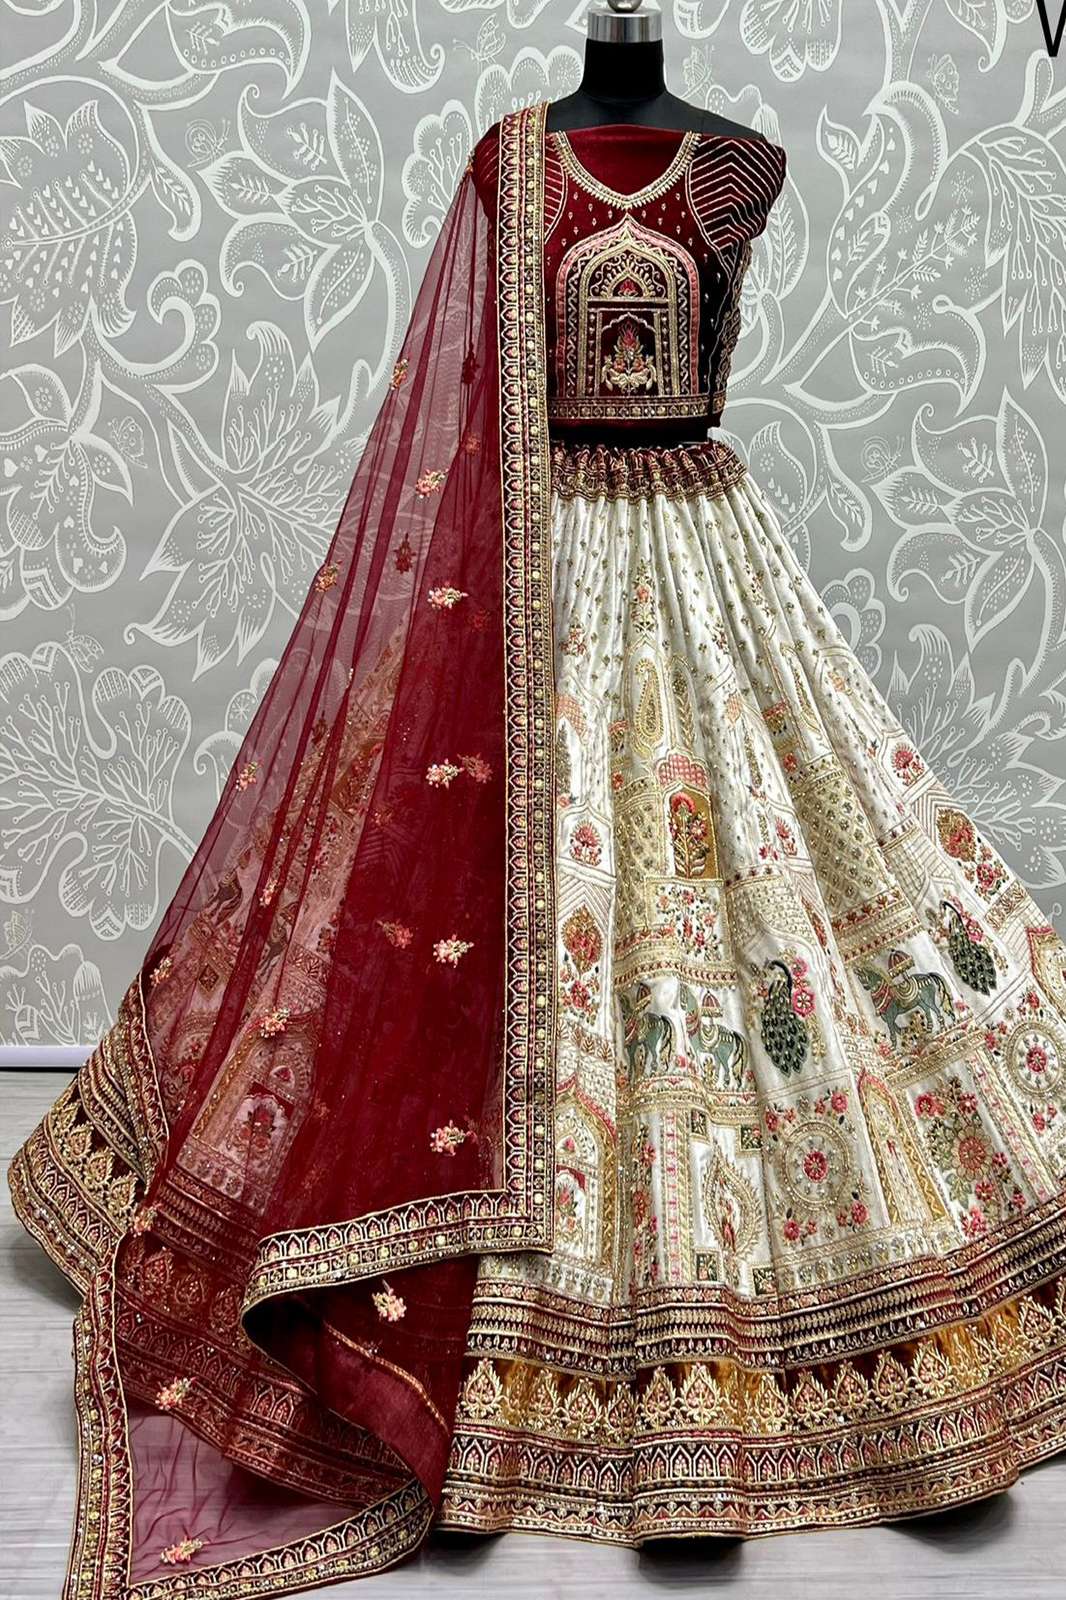 ANJANI ART 2466A TO 2466Dc  fancy embroidery zari and sequins work Multi thread embroidery Diamond work lehenga 